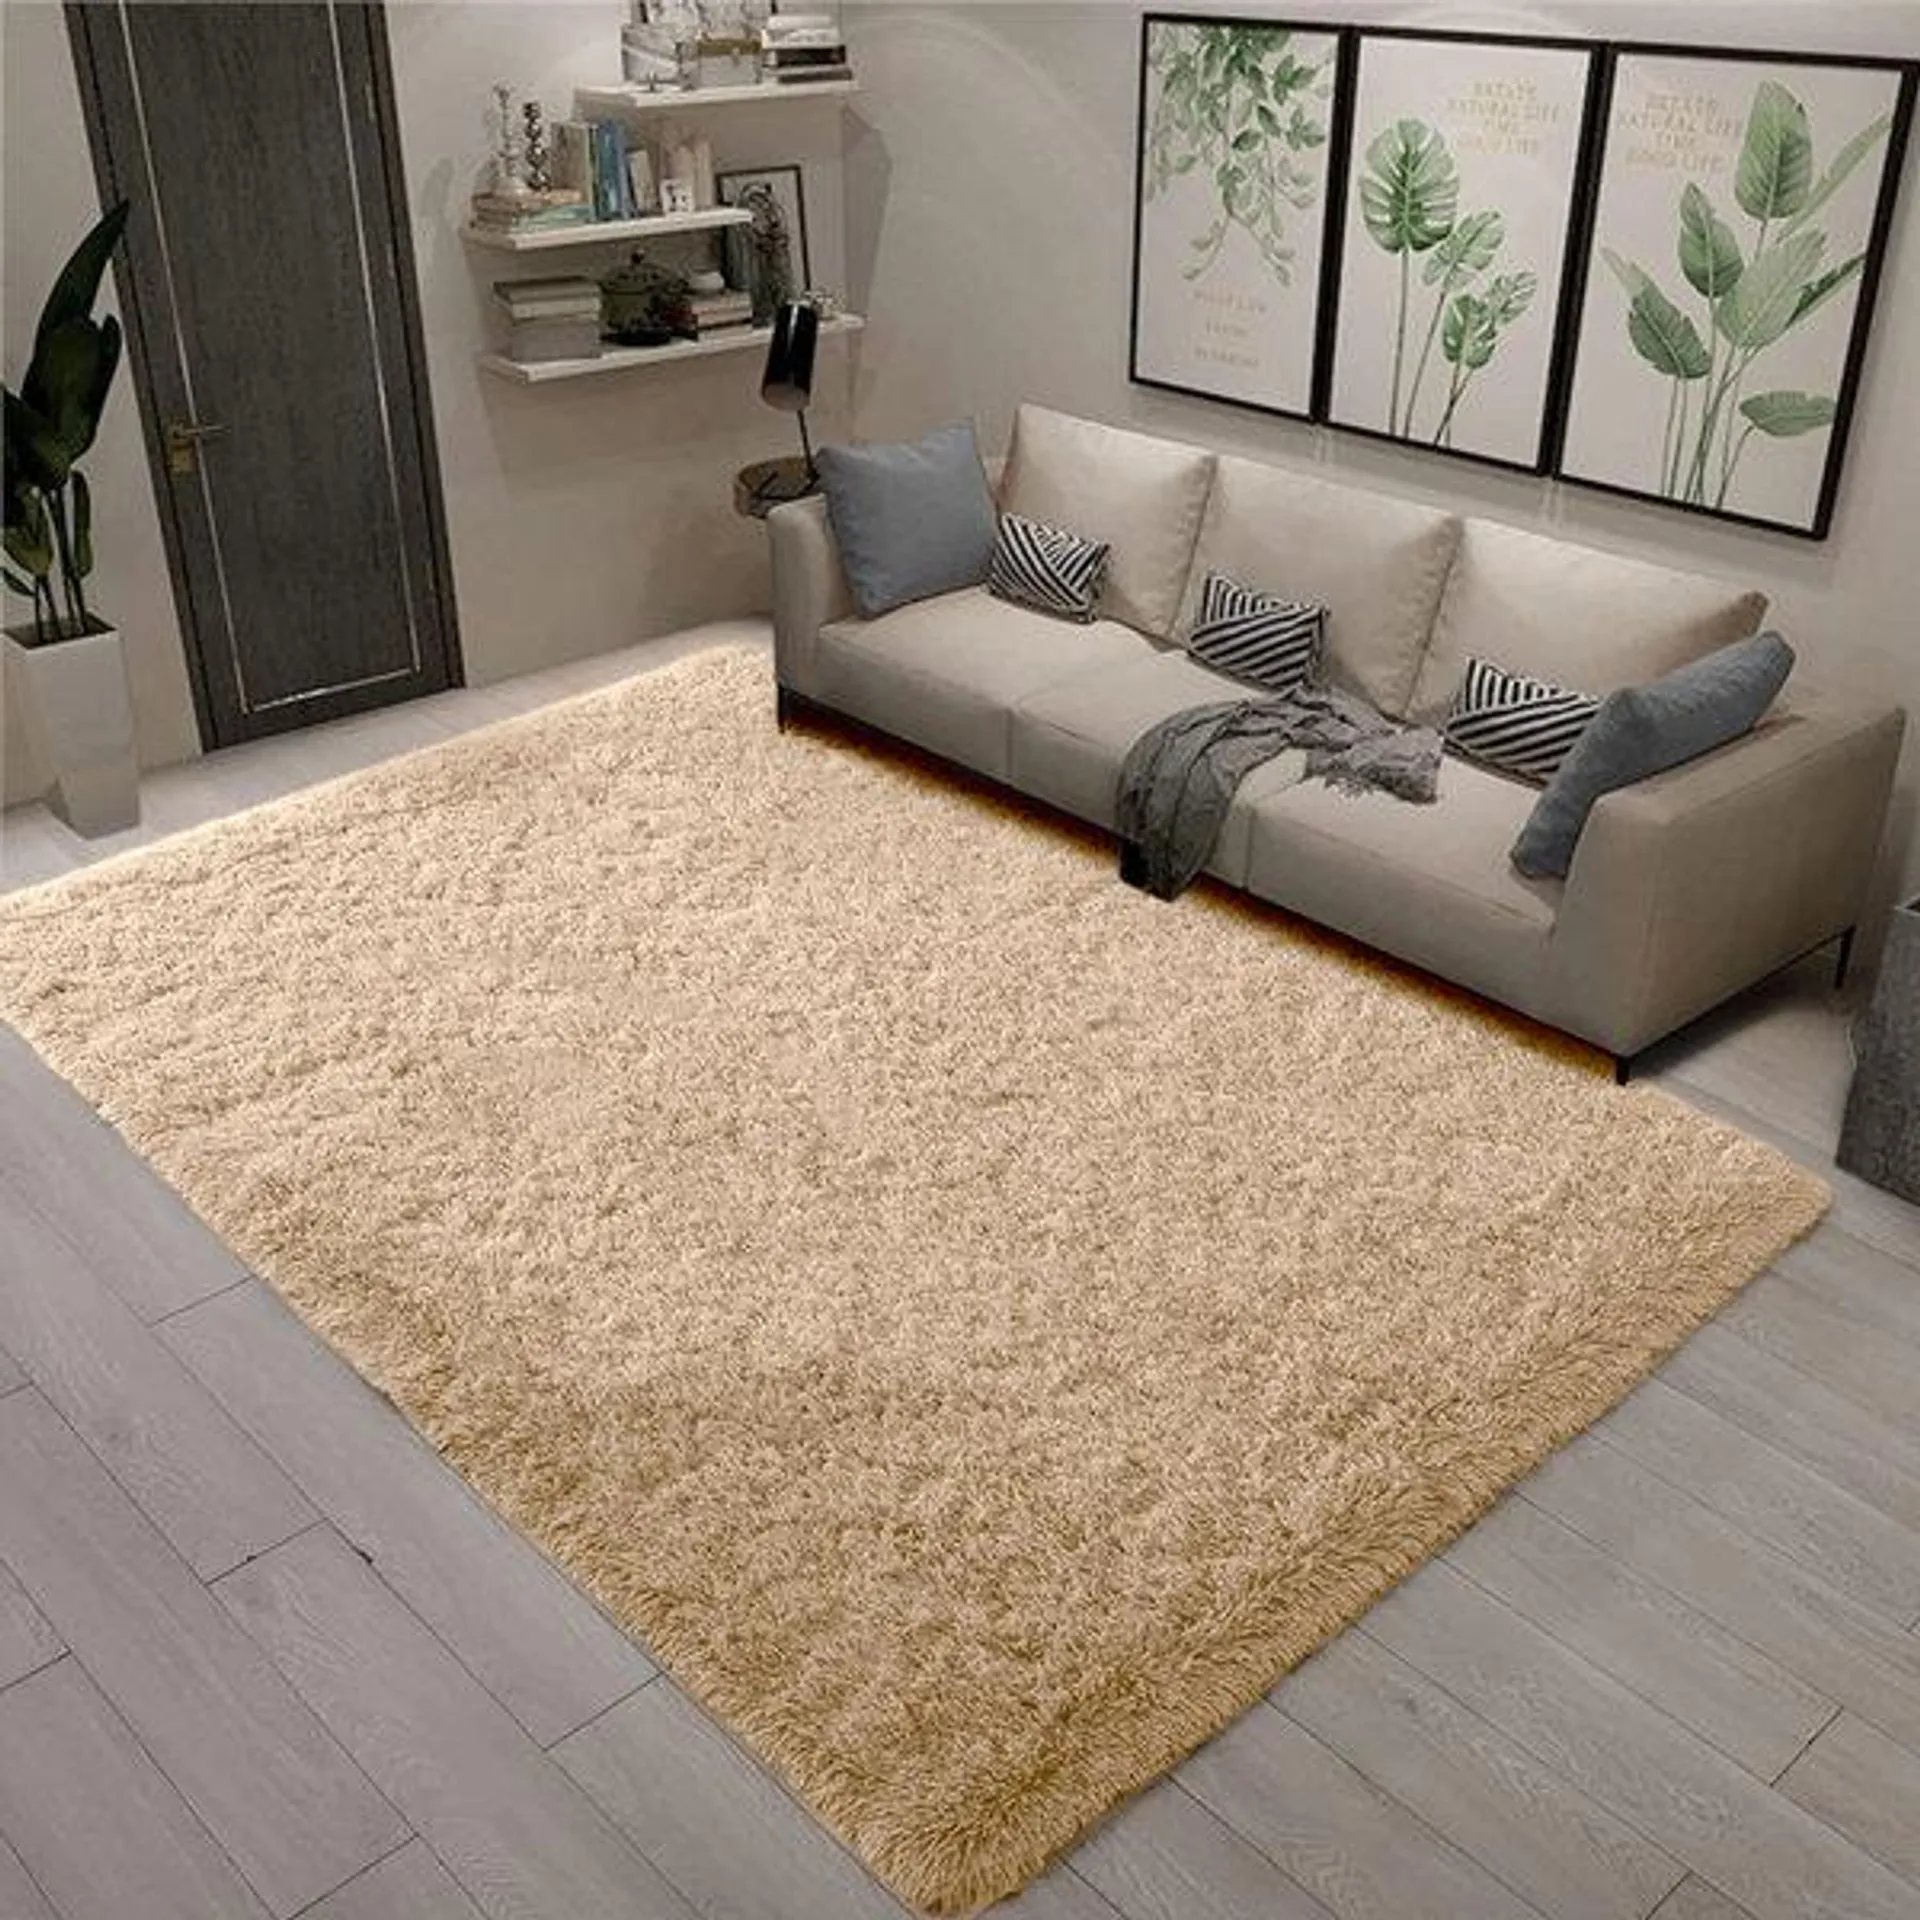 Ainikki Soft Fluffy Living Room/Bedroom Shaggy Area Rugs